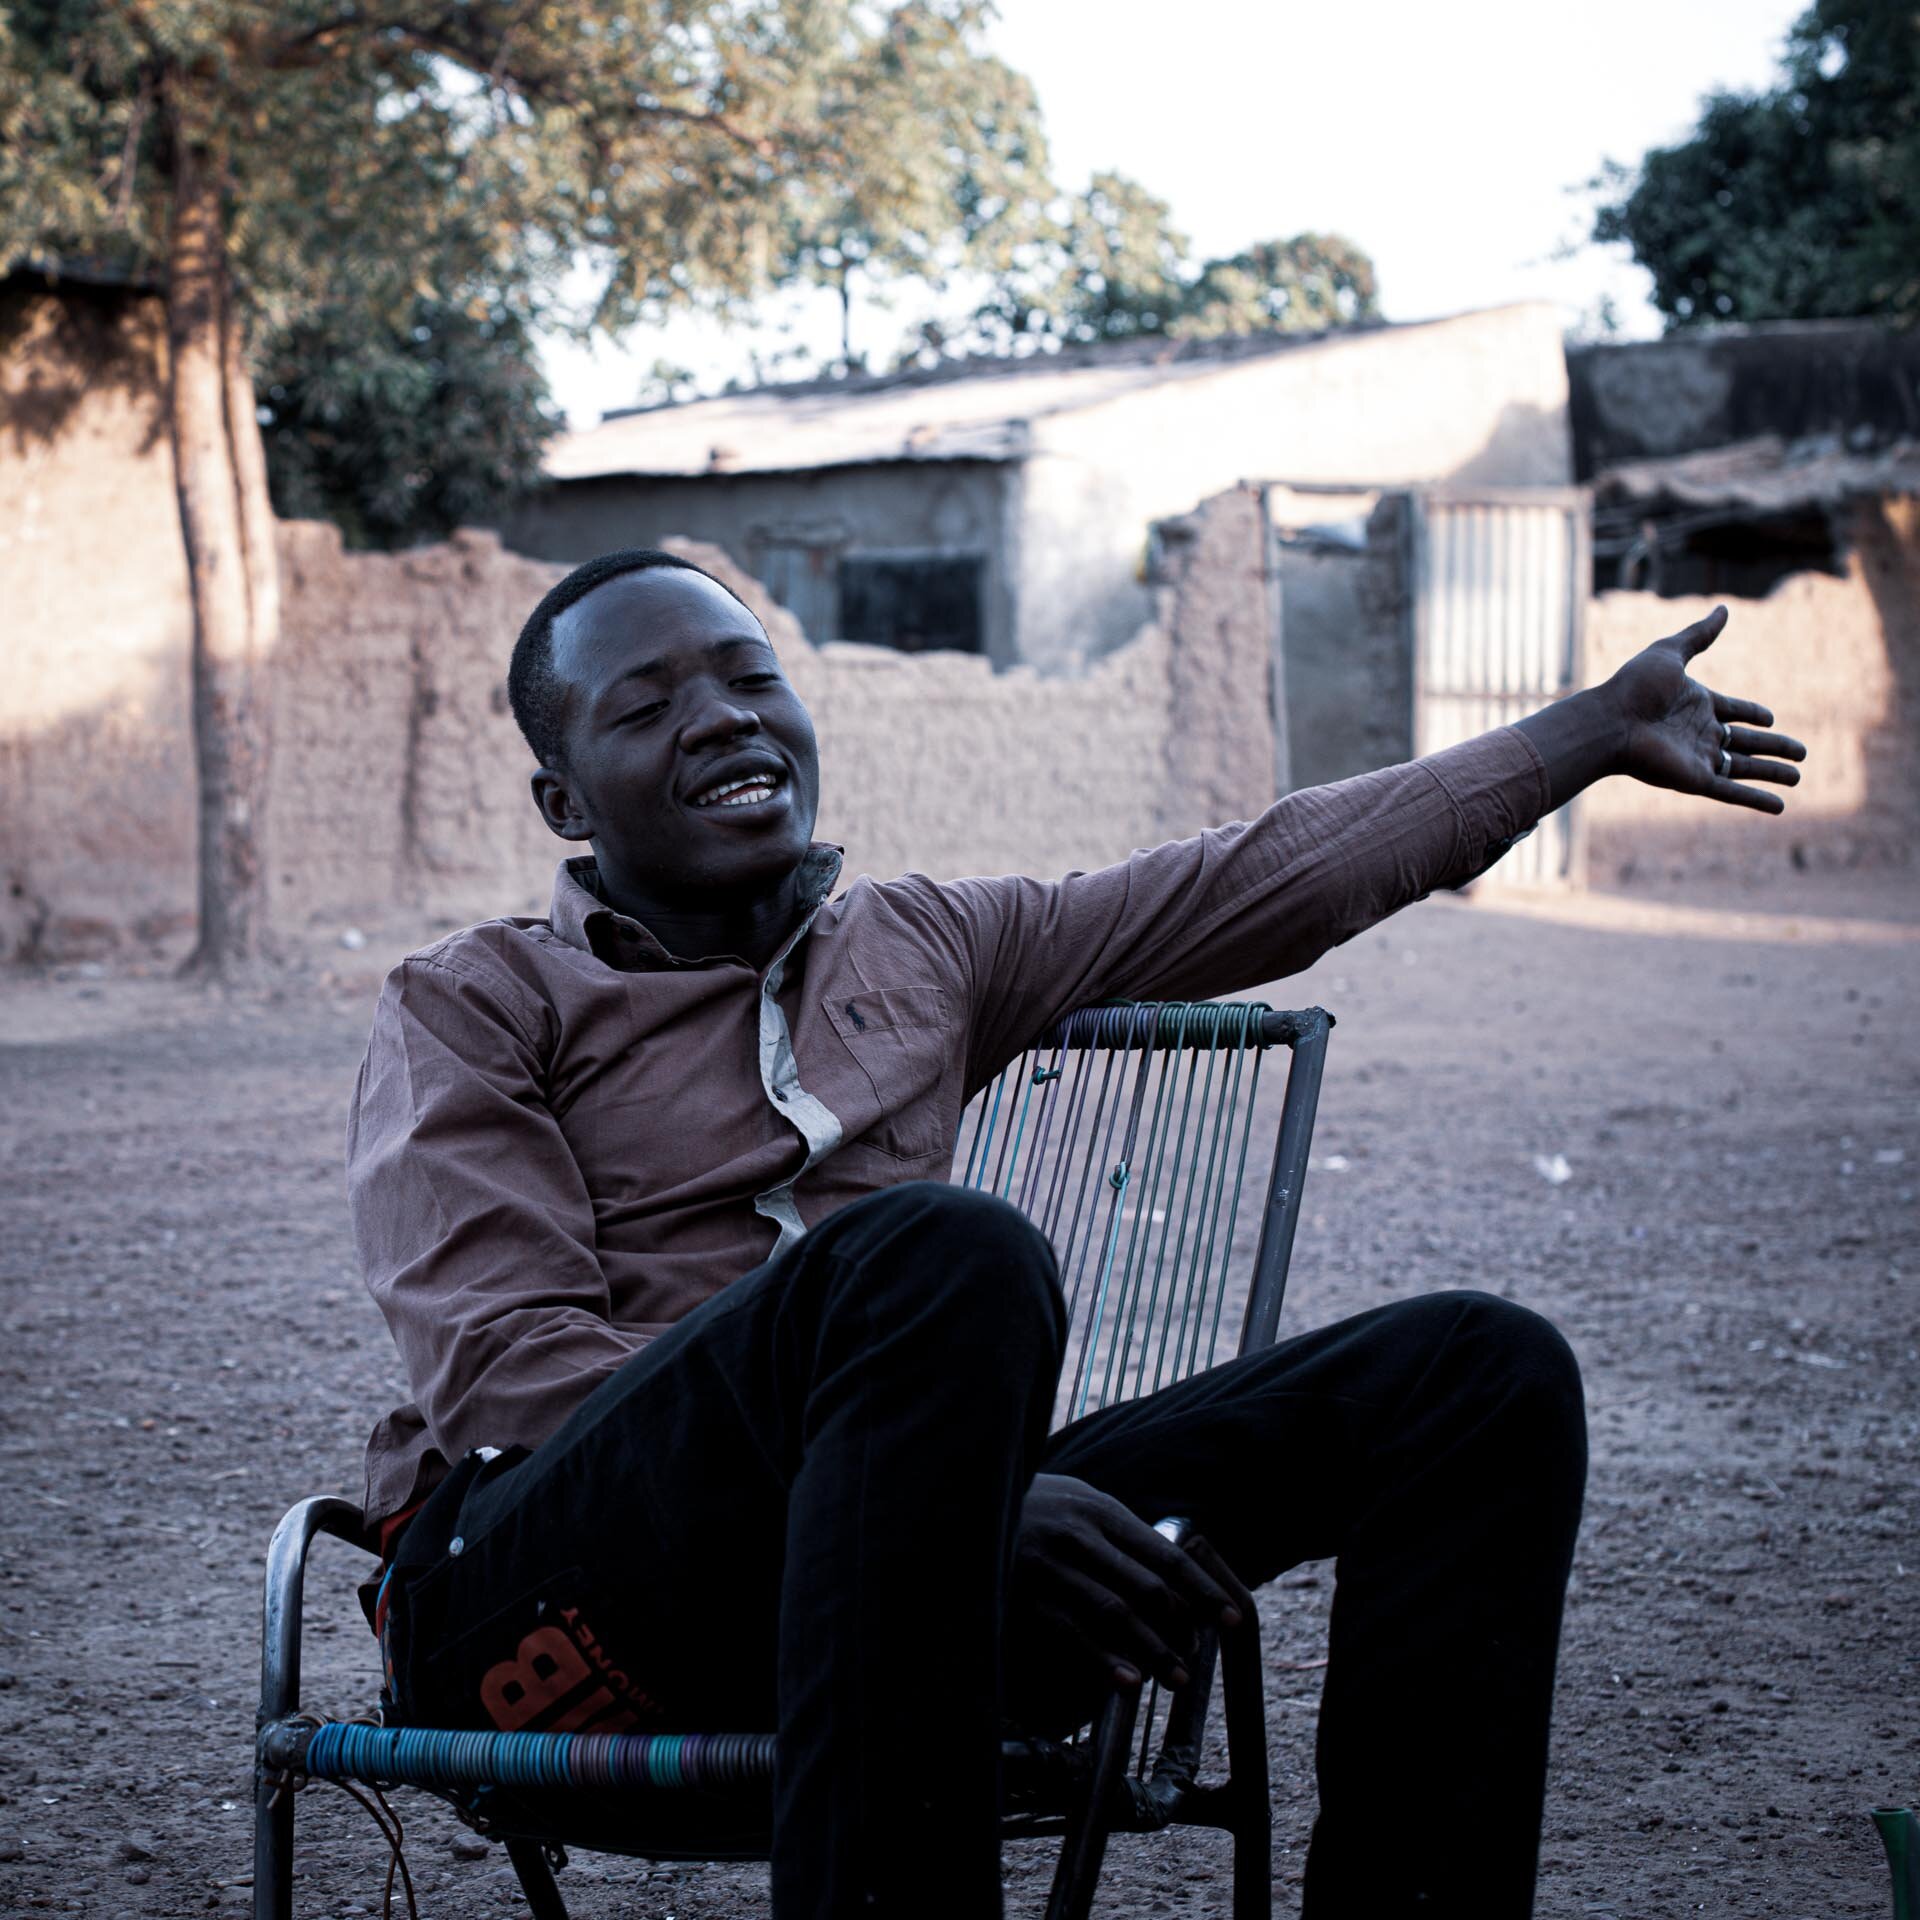 La jeunesse veille au "grain", Bamako, Mali, 2013.